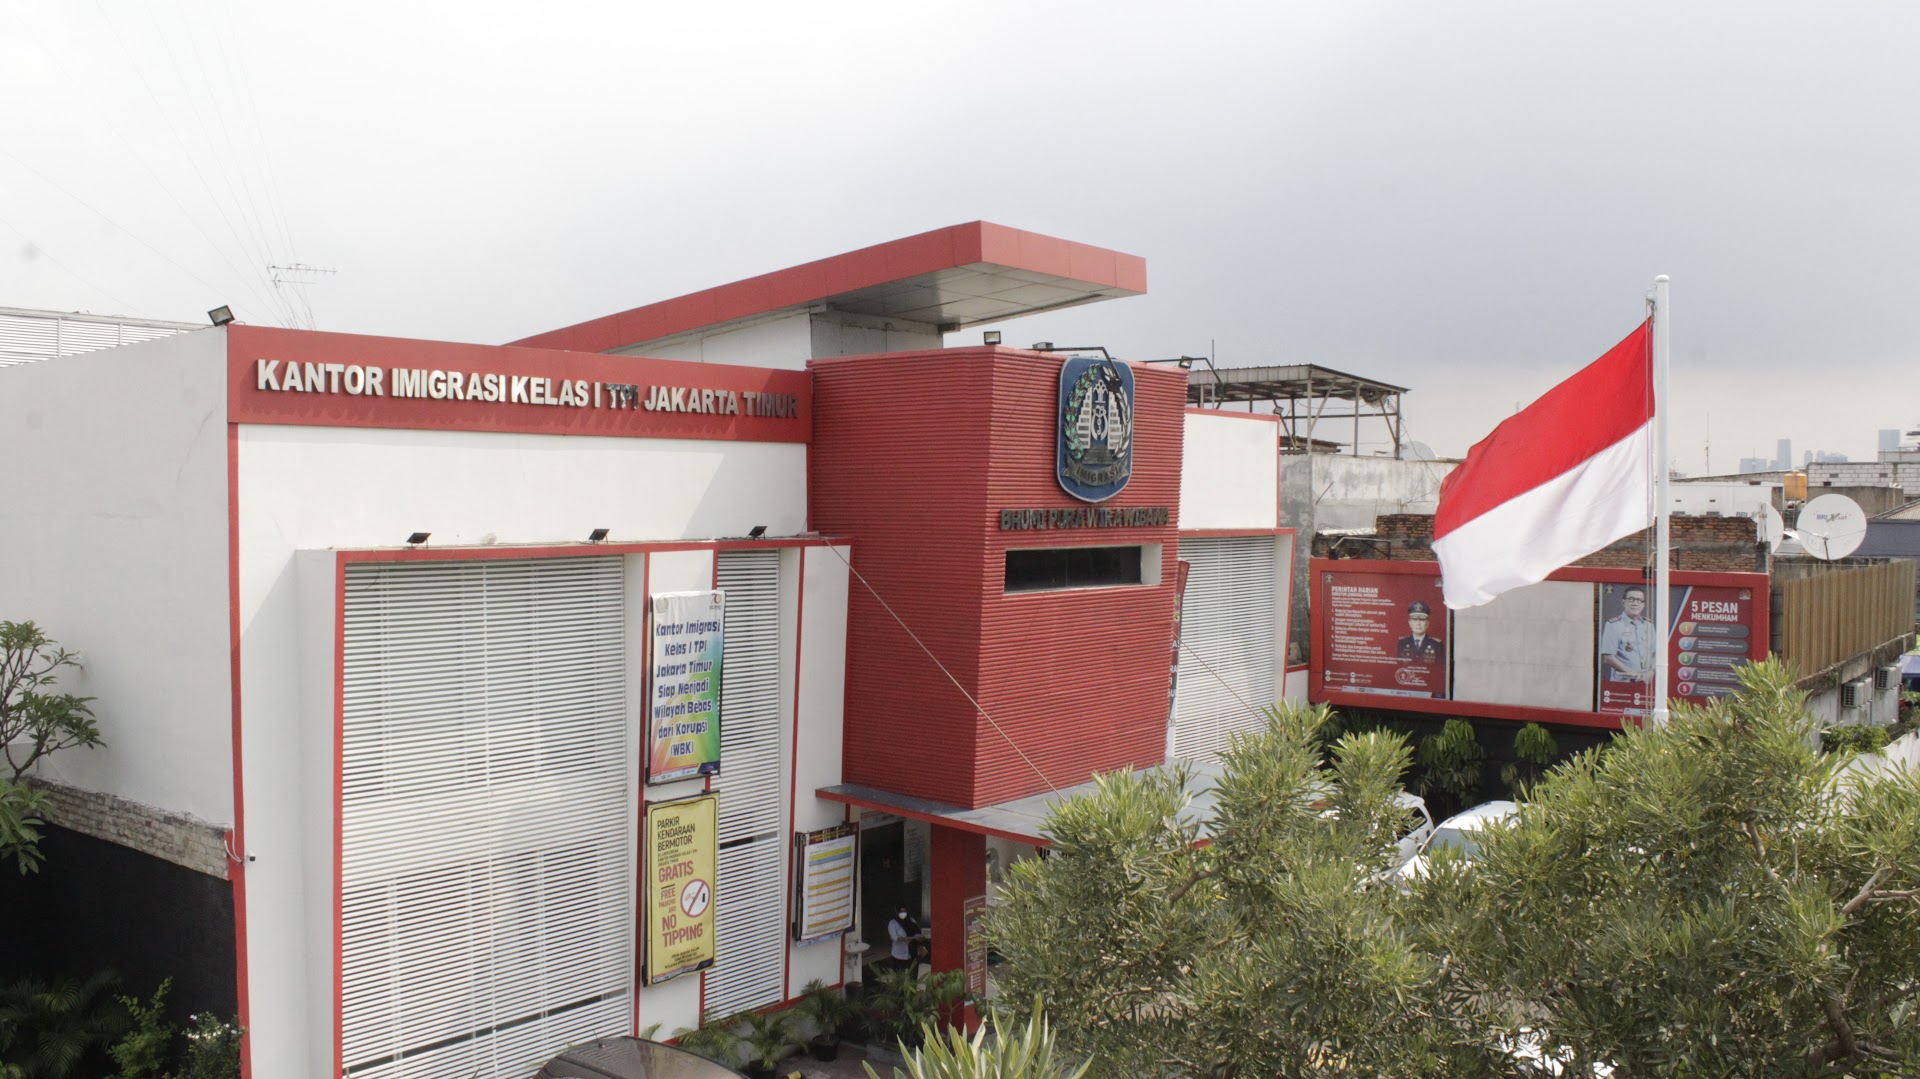 Kantor Imigrasi Kelas I Tpi Jakarta Timur Photo